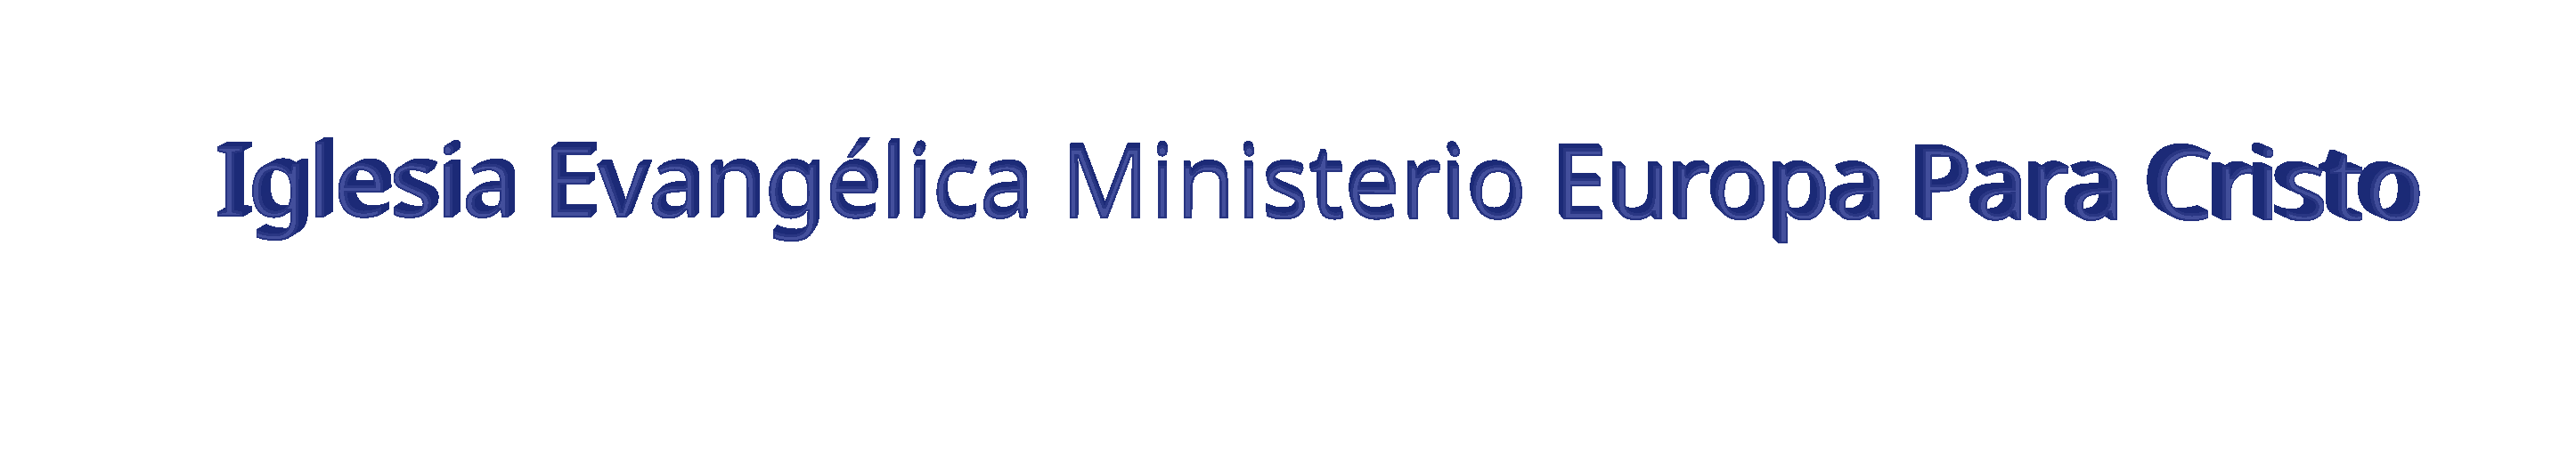 Iglesia Evangélica Ministerio Europa Para Cristo